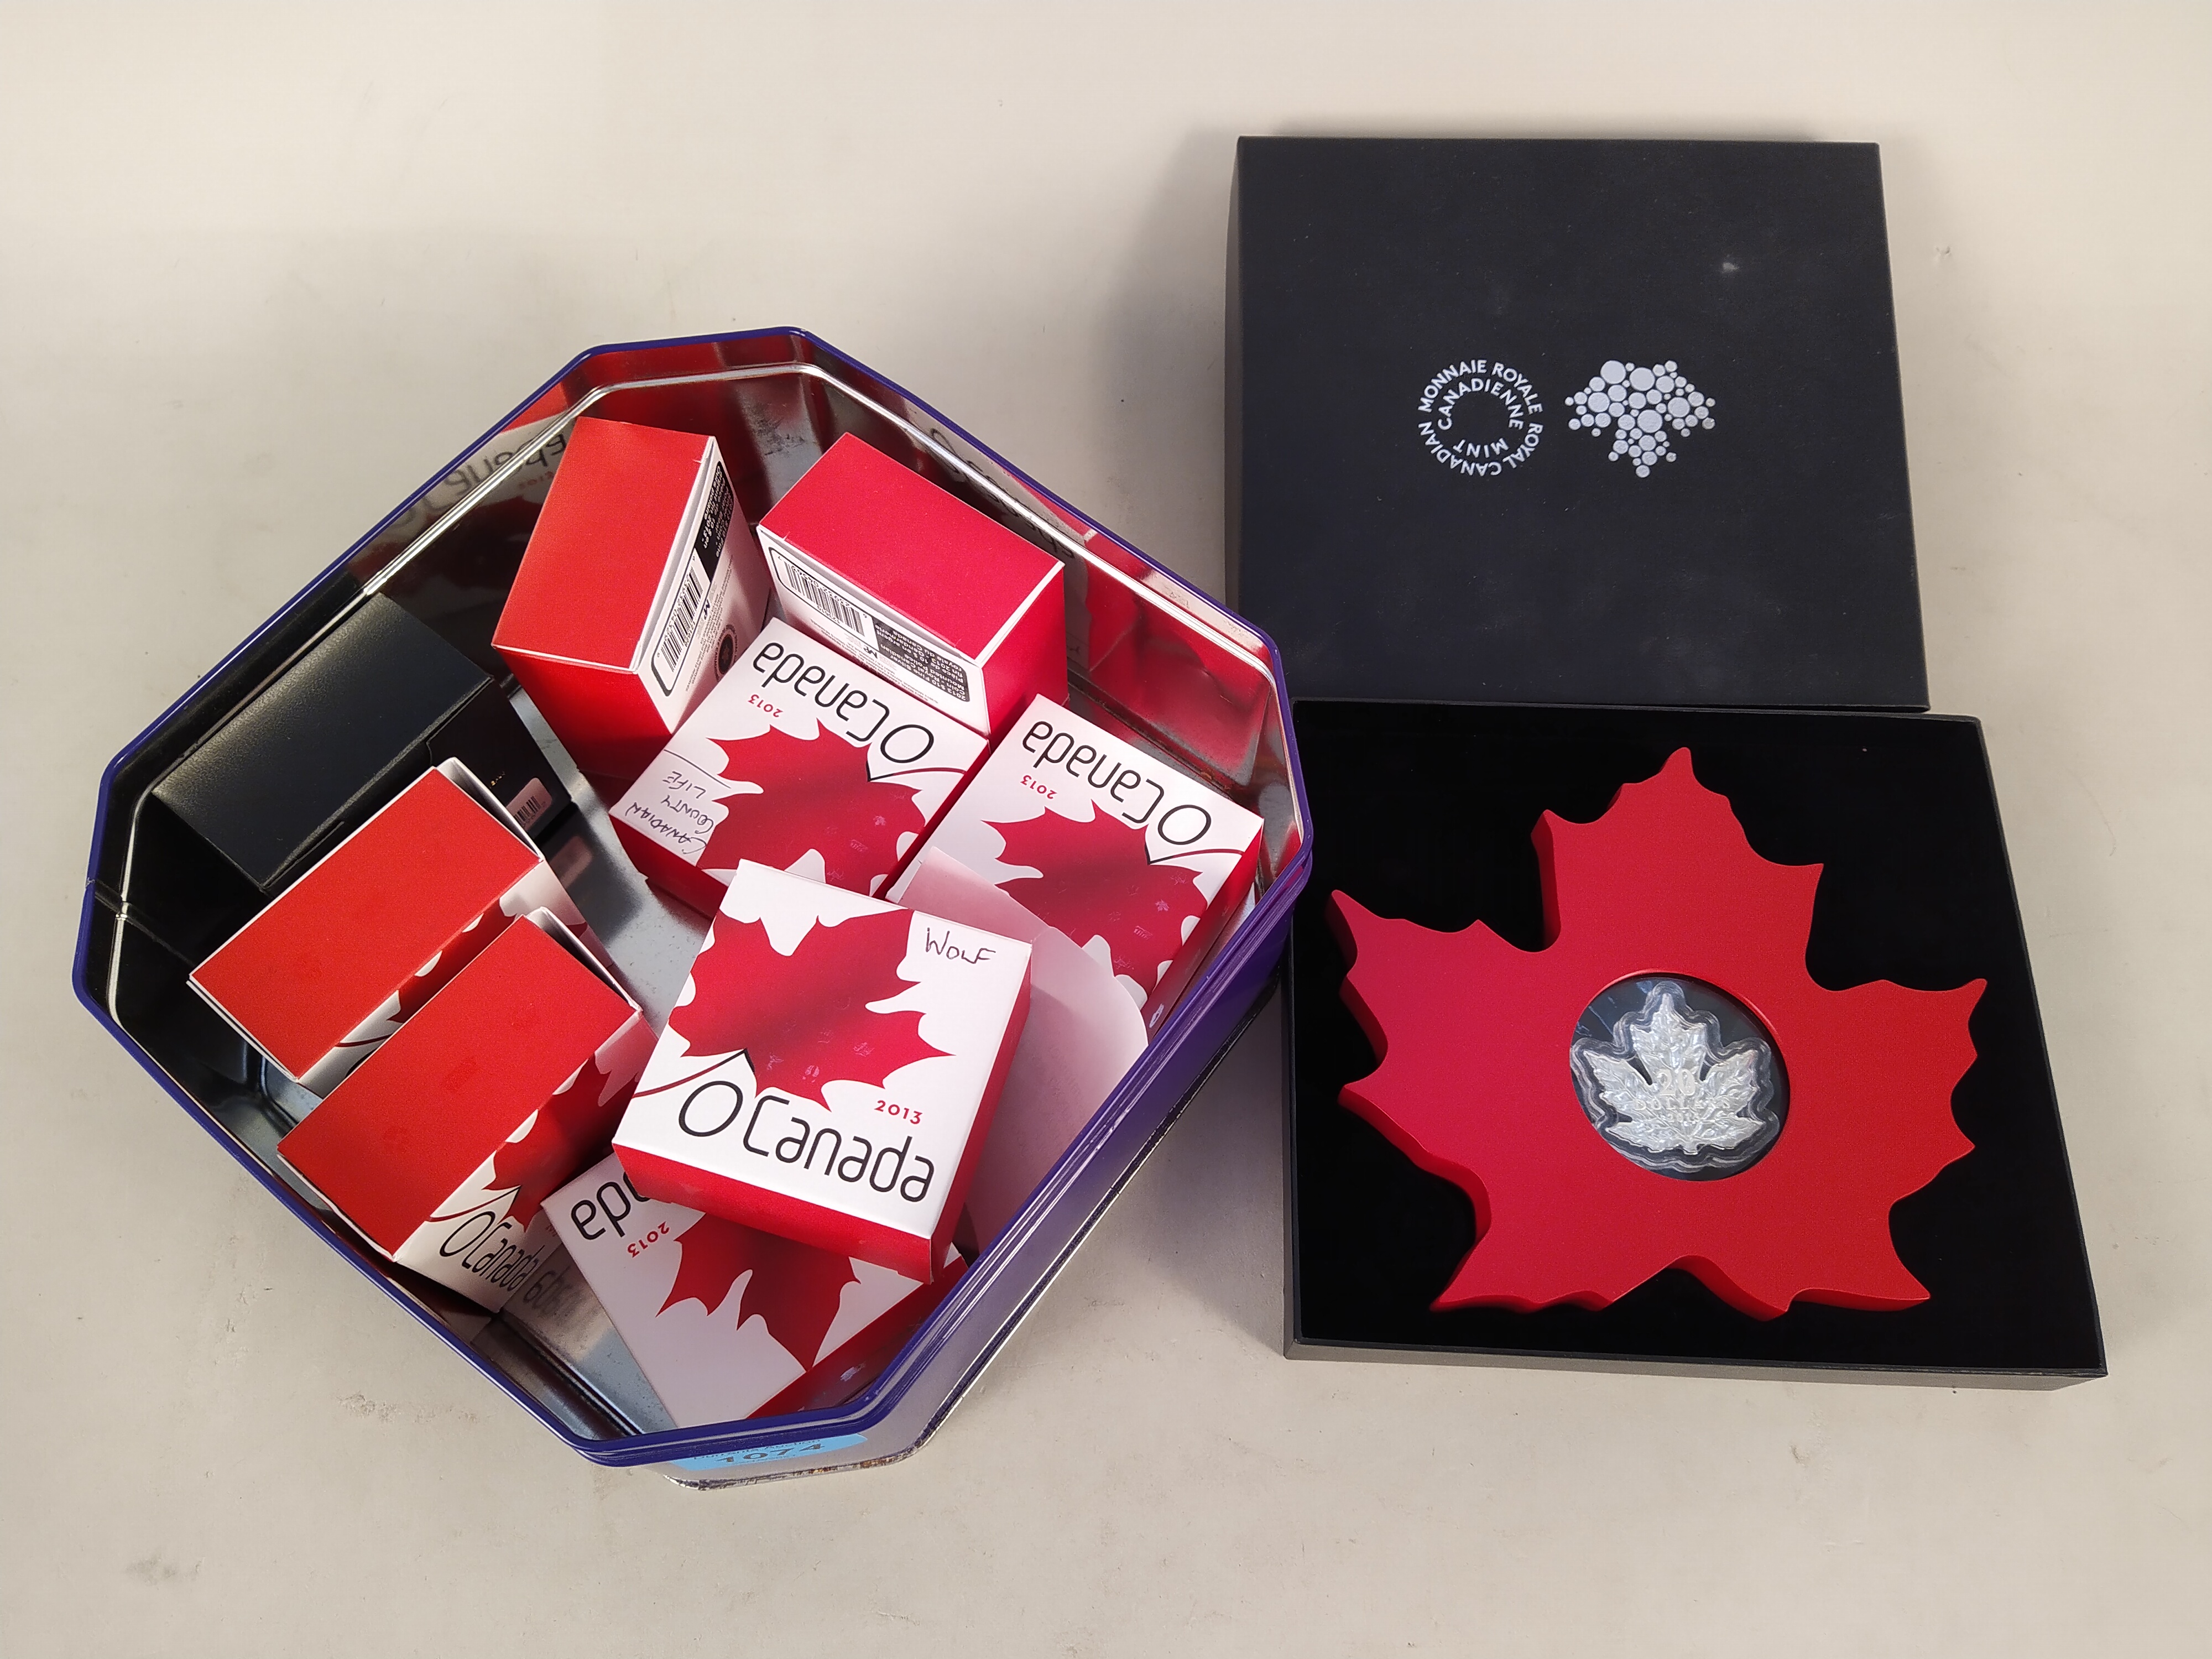 Nine Royal Canadian mint 2013 ten dollar silver coins plus a Canadian mint boxed 20 dollar 2015